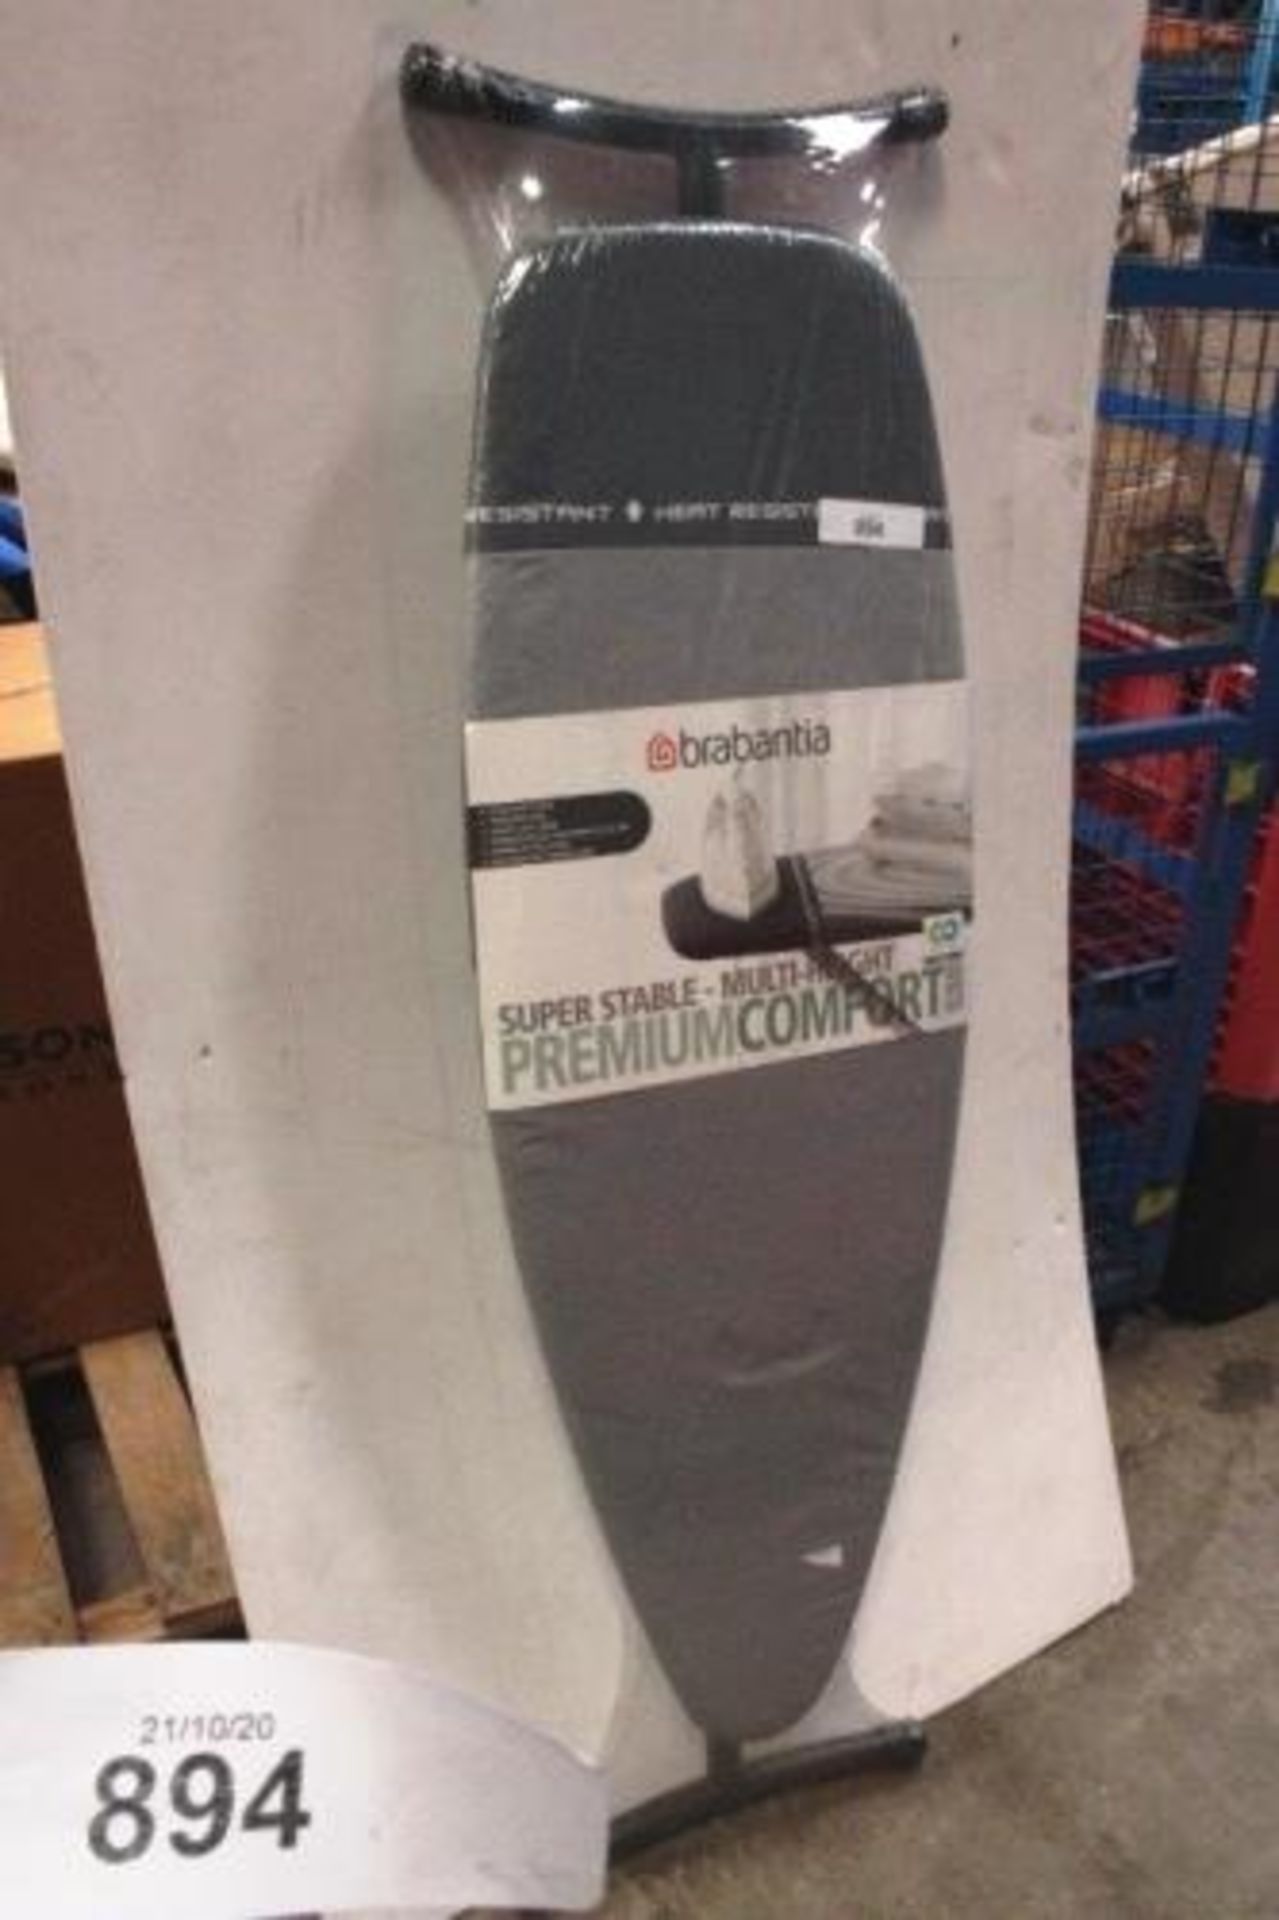 1 x Brabantia metallised super stable multi-height premium comfort ironing board, code 0001 ART